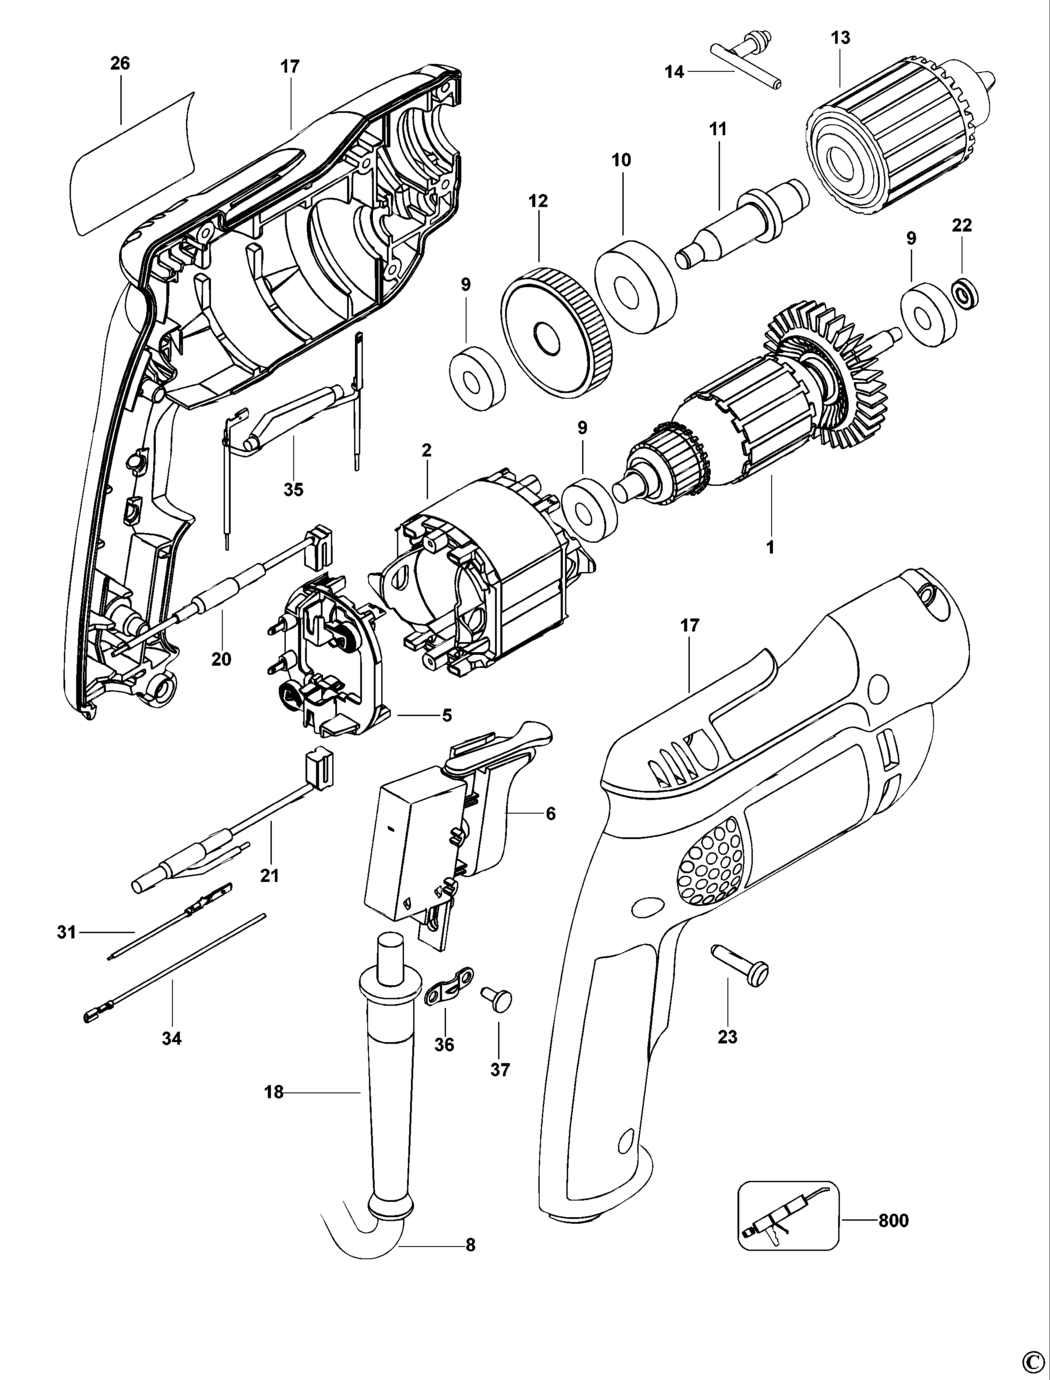 Dewalt D21002 Type 1 Drill Spare Parts